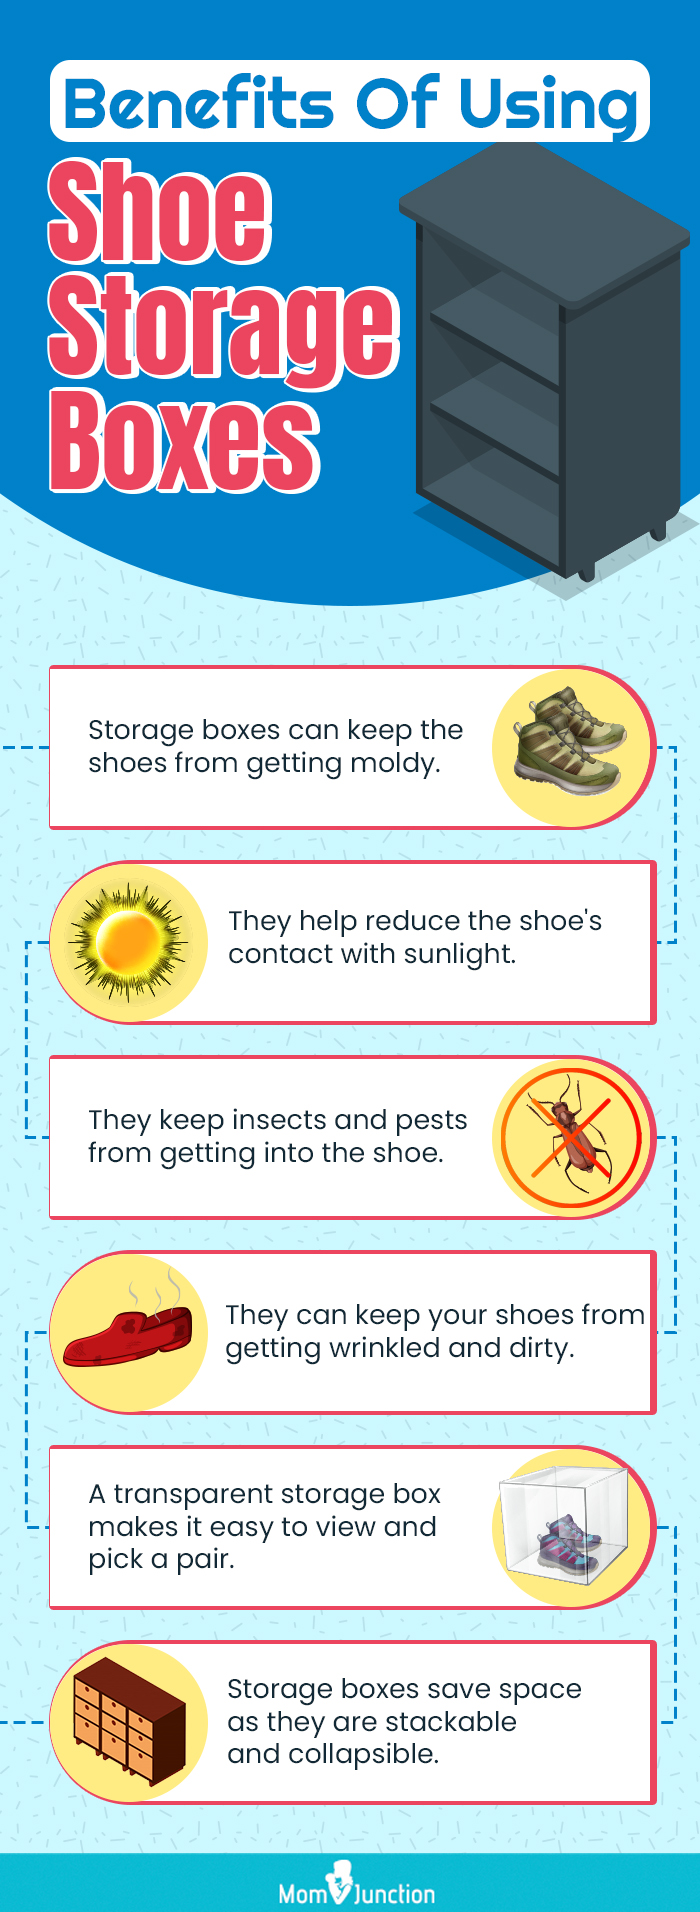 Benefits Of Using Shoe Storage Boxes